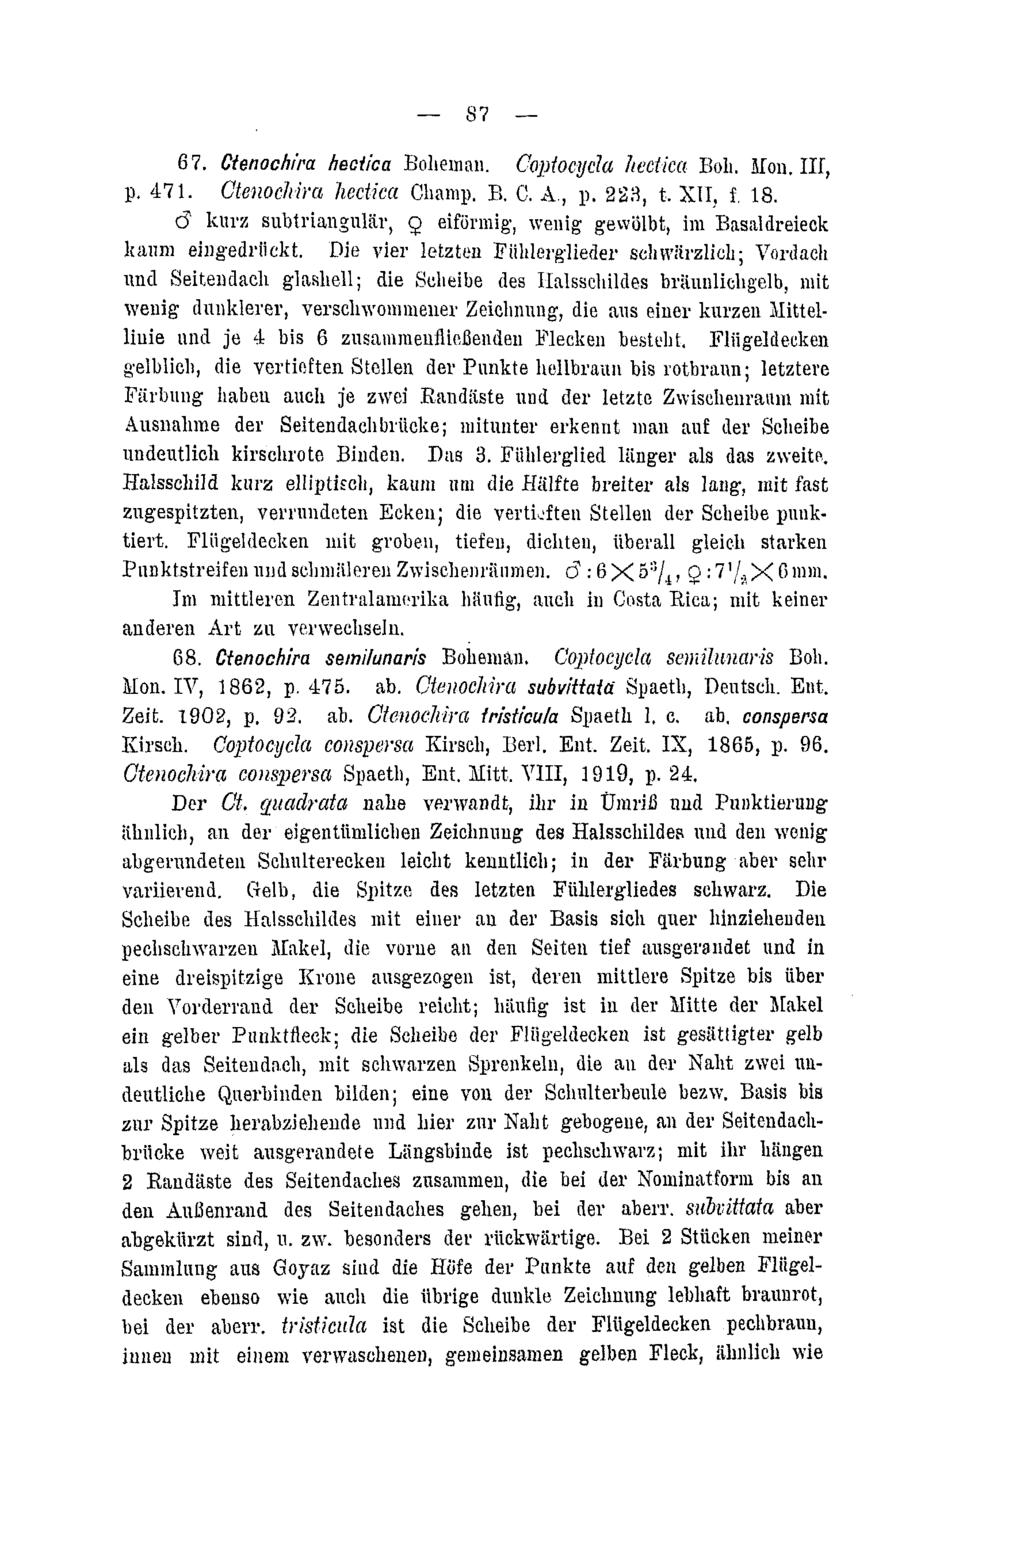 87 67. Ctenochira hectica Boheman. Coptocycla heetka Boli. Mon. III, p. 471. CtenocMra hectica Champ. B. C. A., p. 223, t. XII, f. 18.